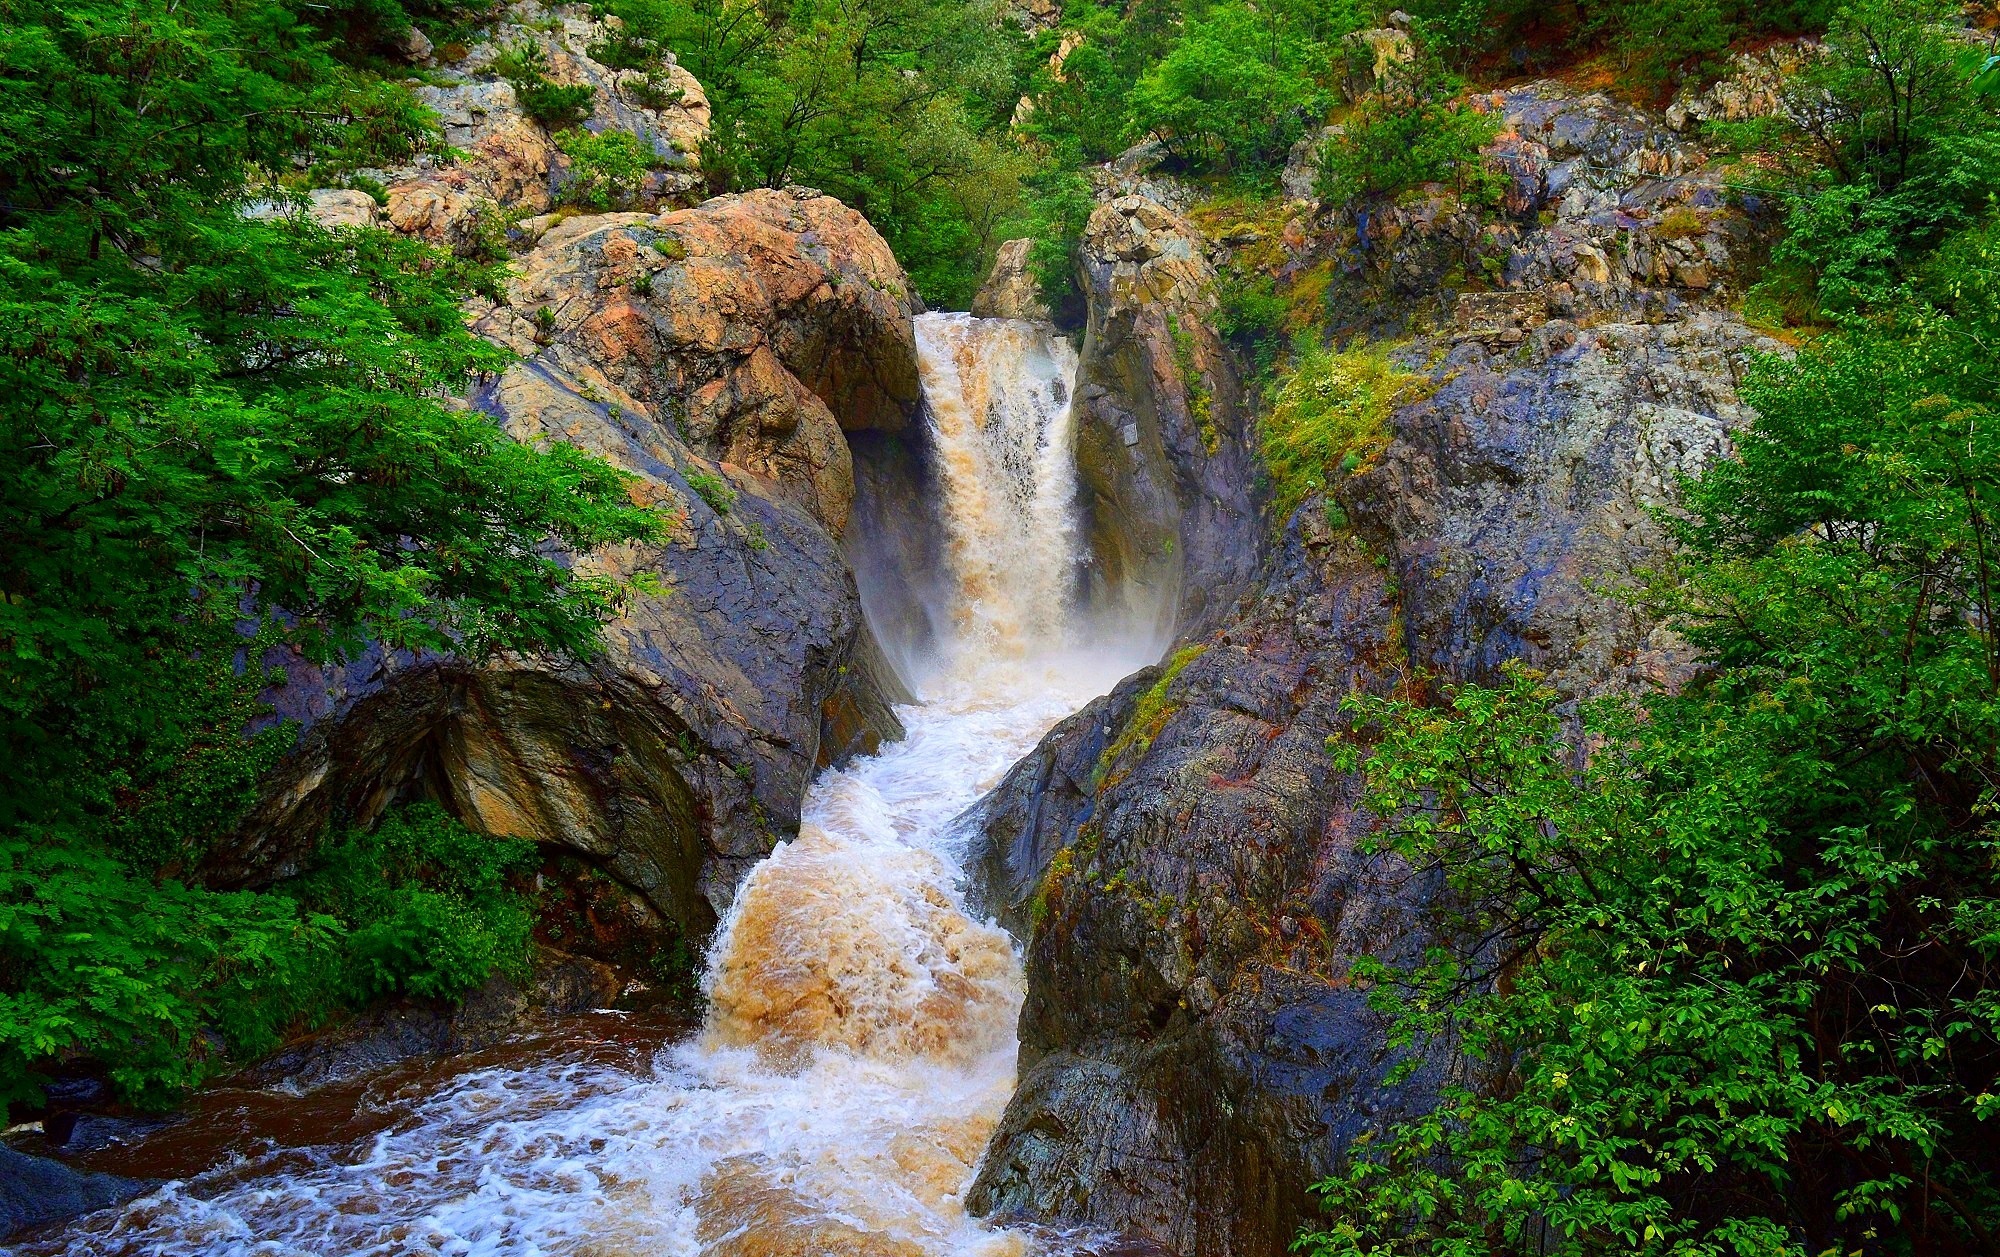 General 2000x1257 nature plants outdoors water creeks waterfall rocks stones